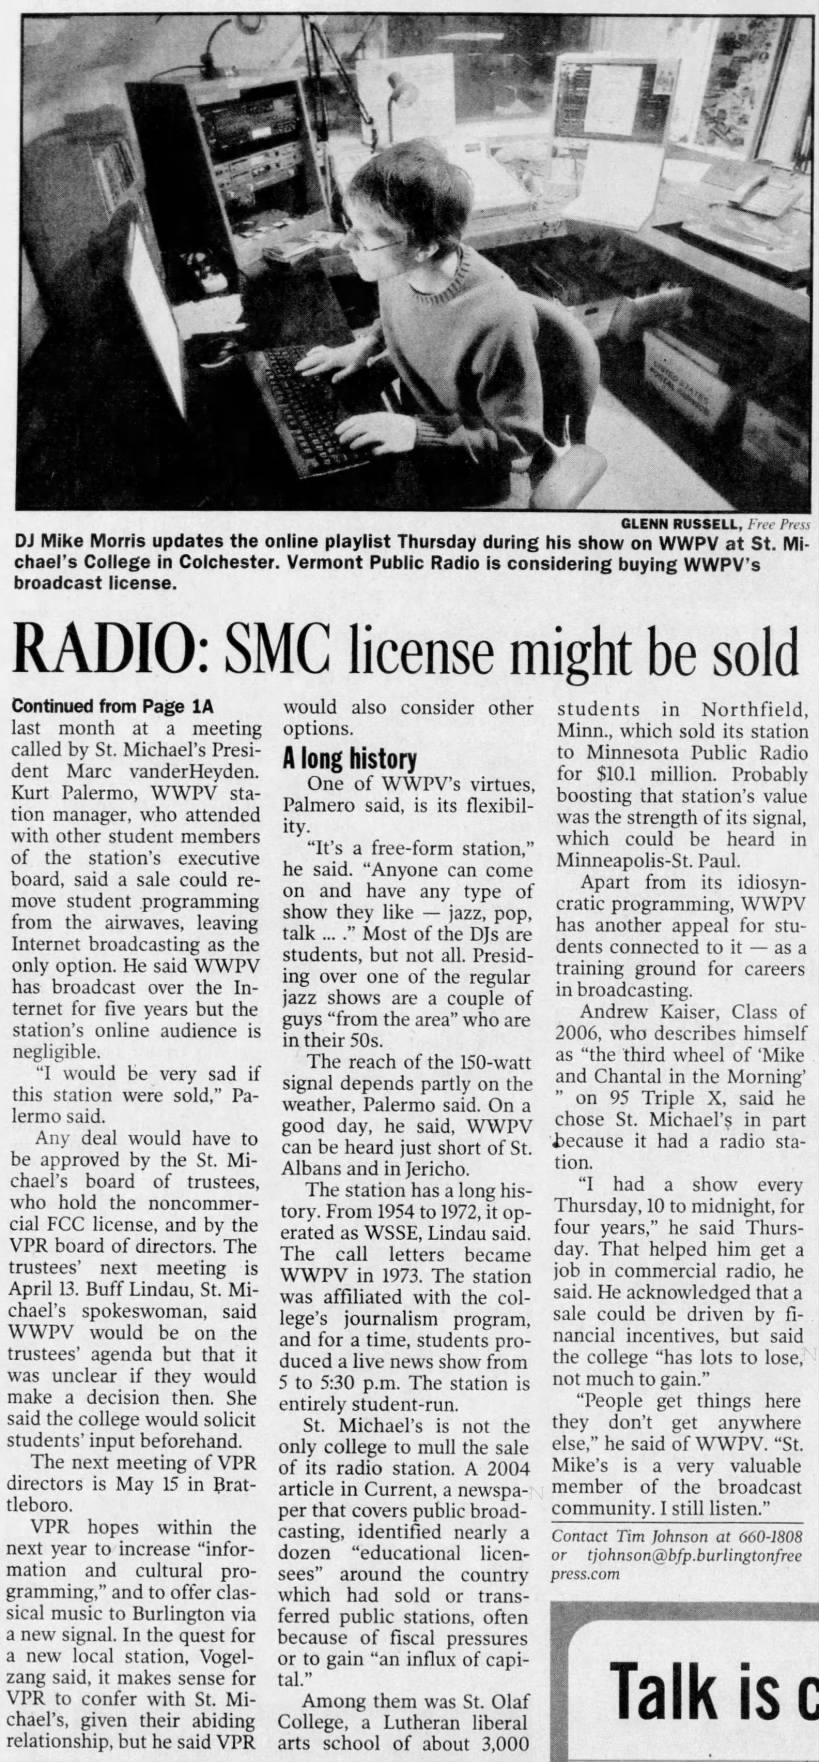 RADIO: SMC license might be sold